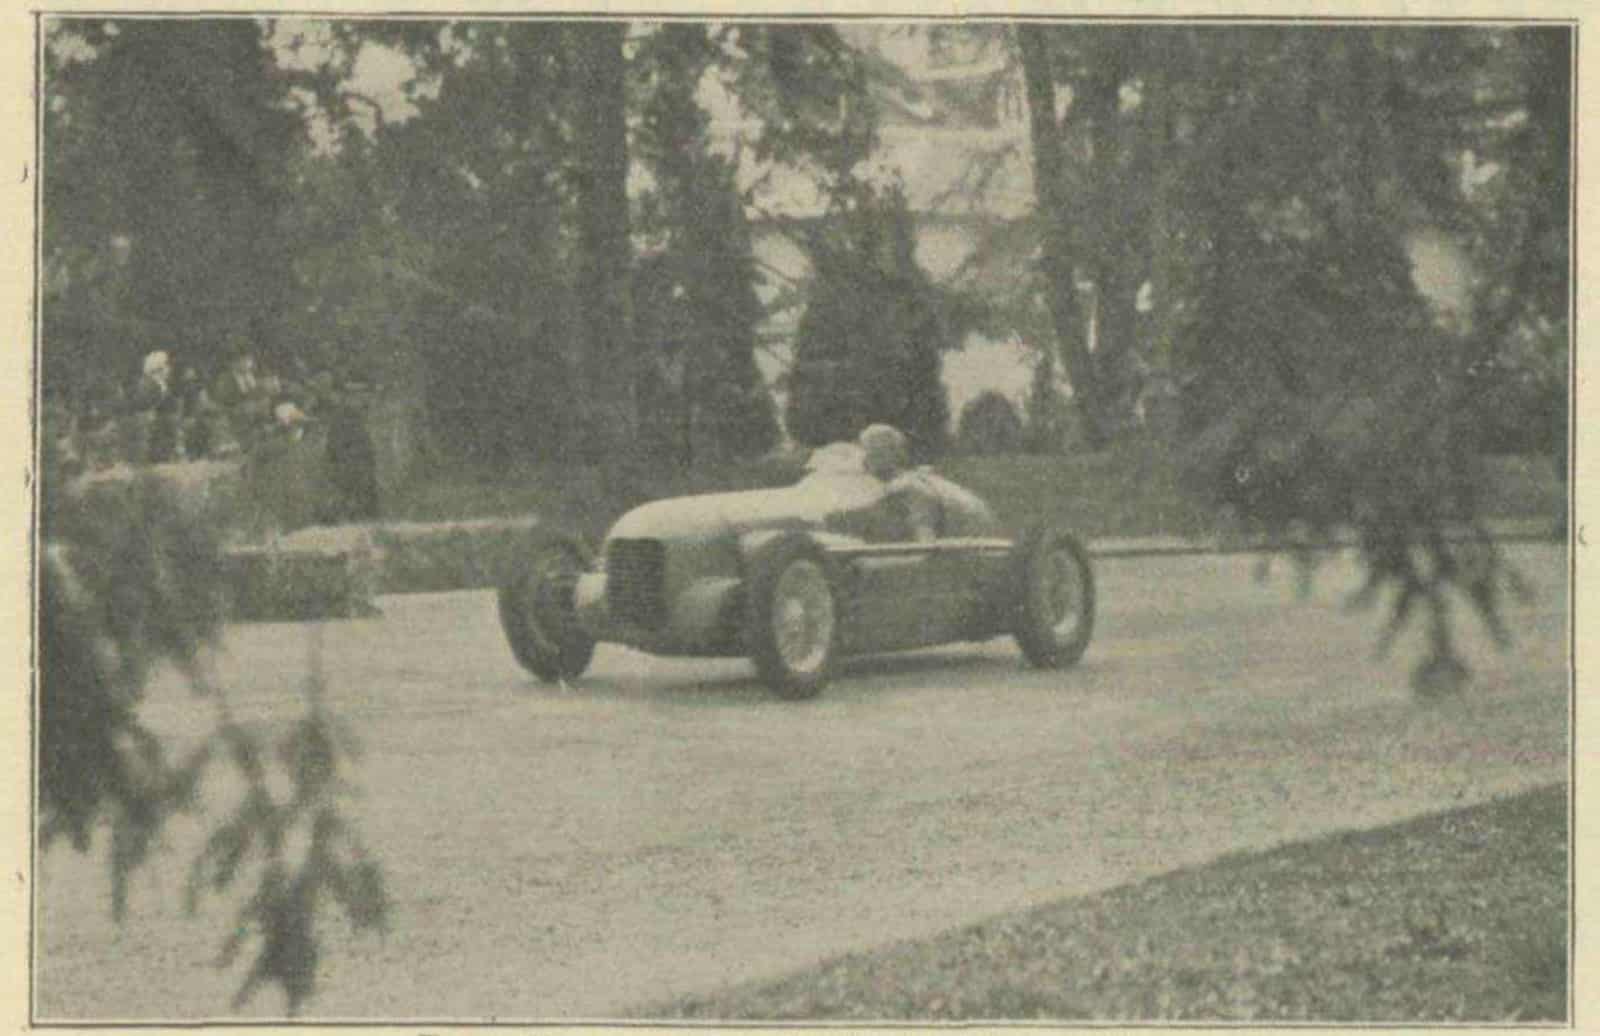 Philippe Etancelin in 1936 Pau Grand Prix